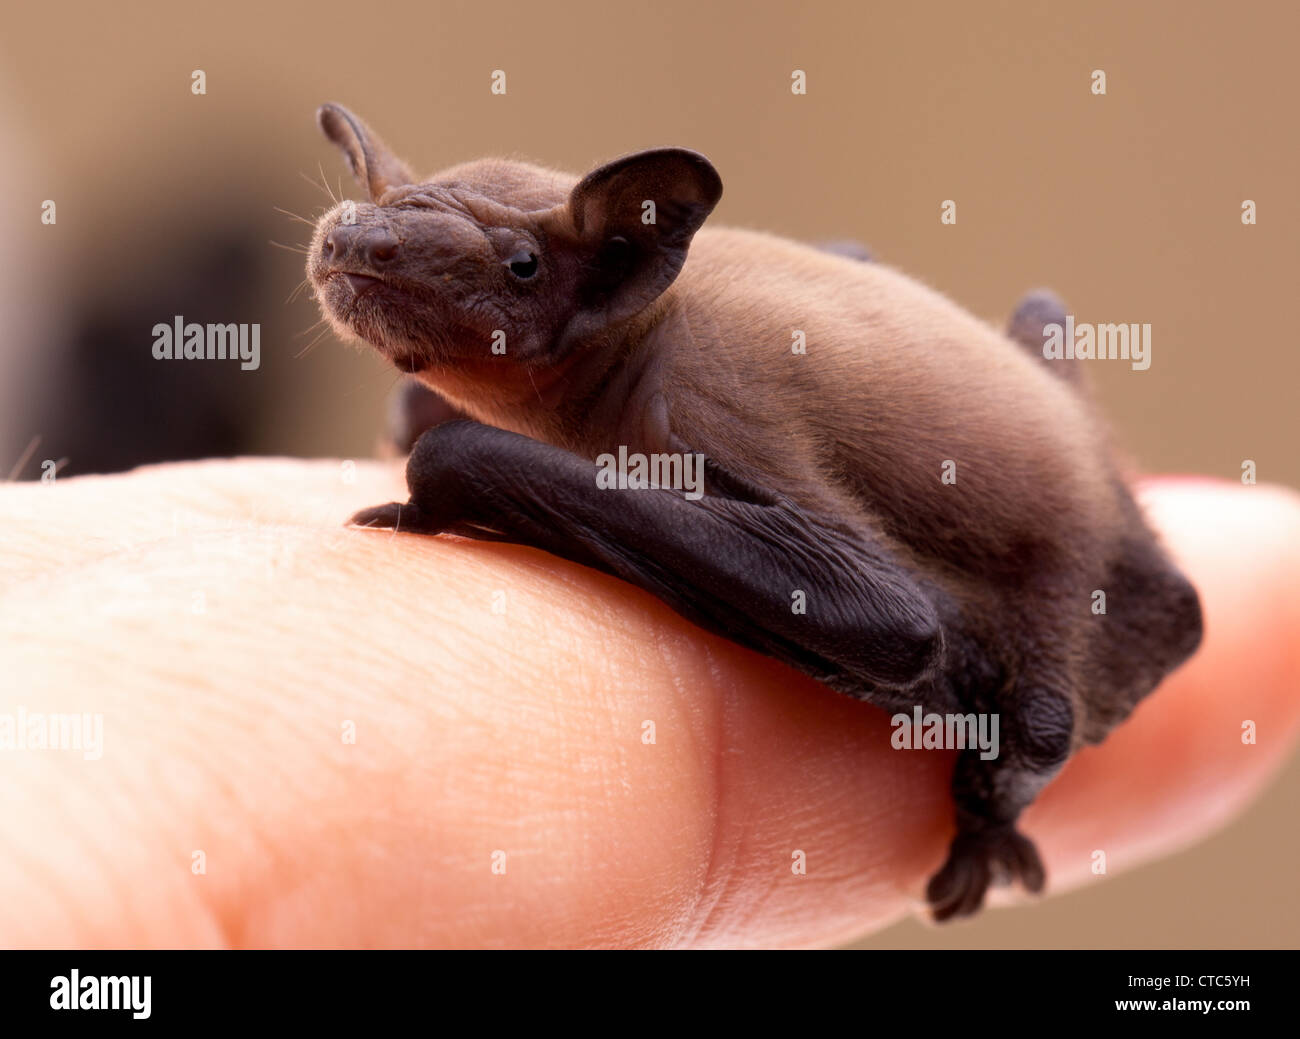 Sweet Baby bat sulla donna dito. Foto Stock